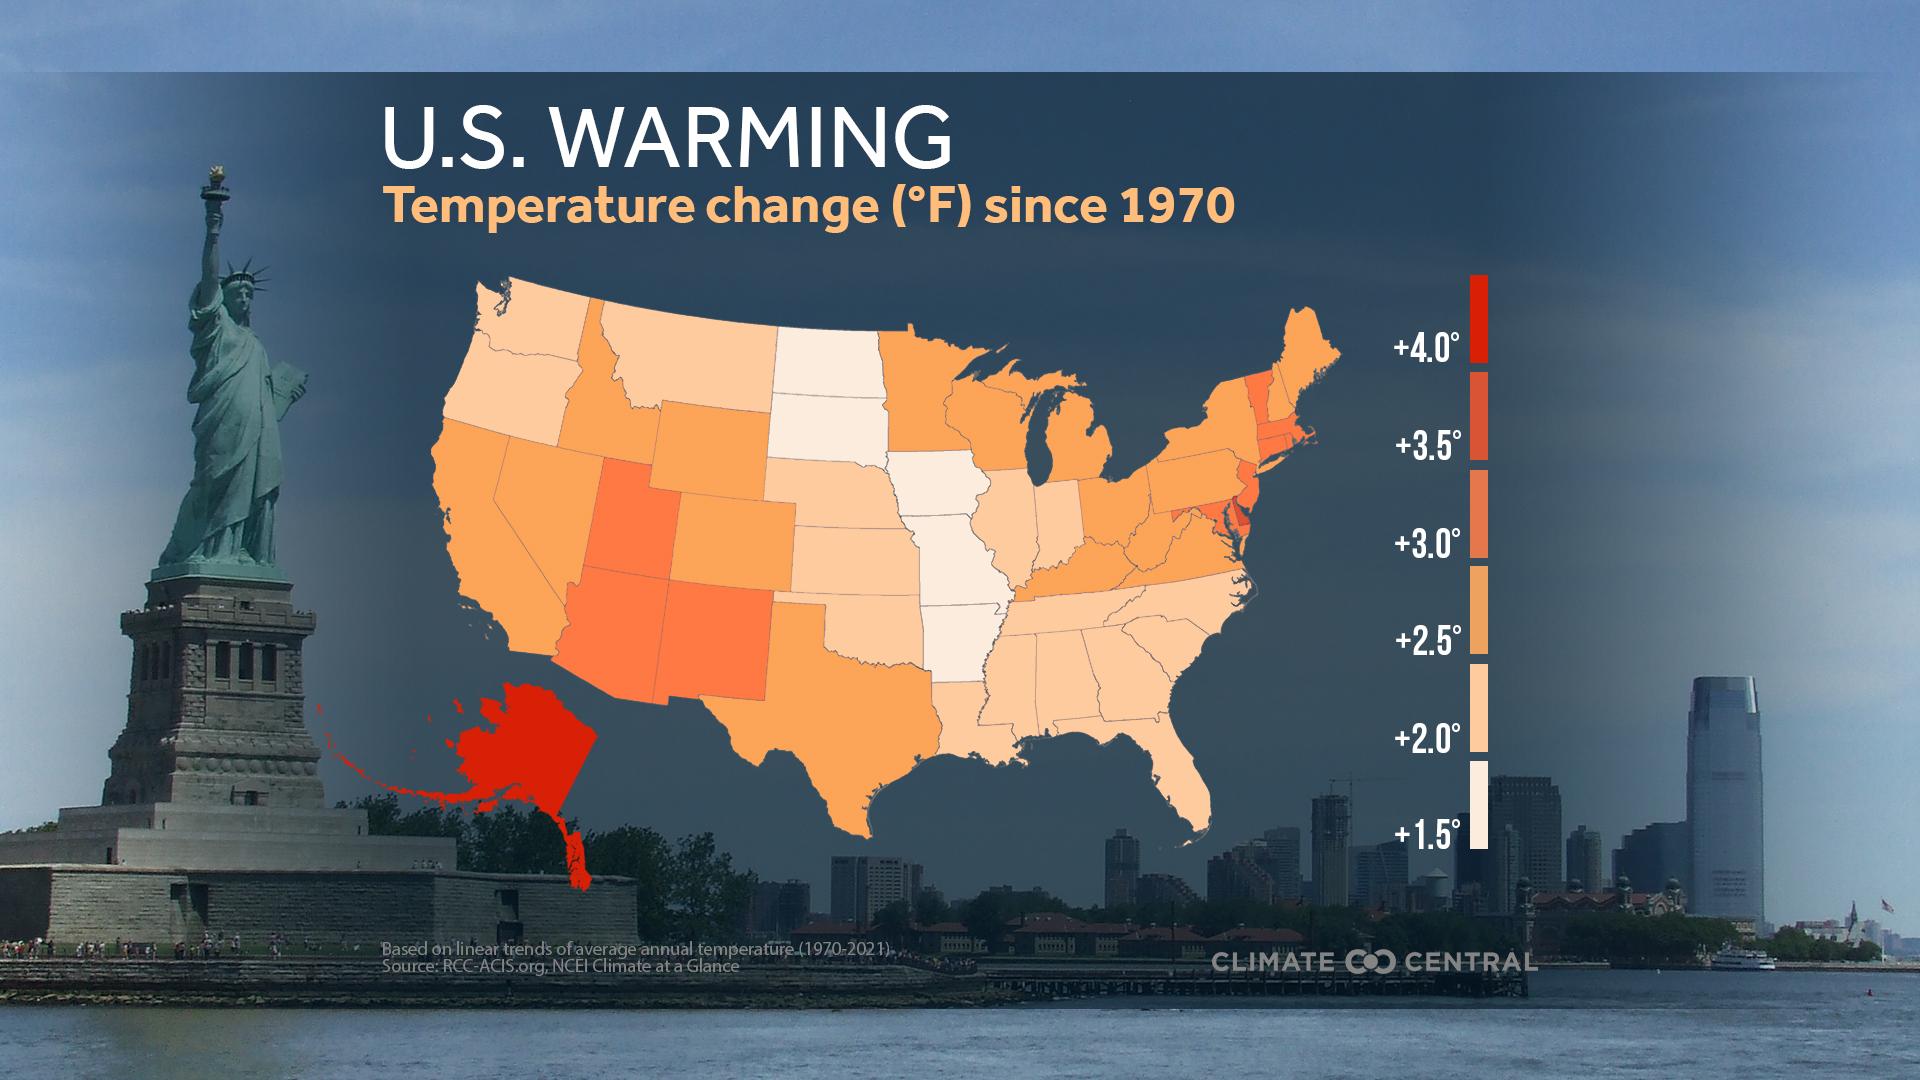 U.S. Warming since 1970 - Earth Day: U.S. Warming Rankings